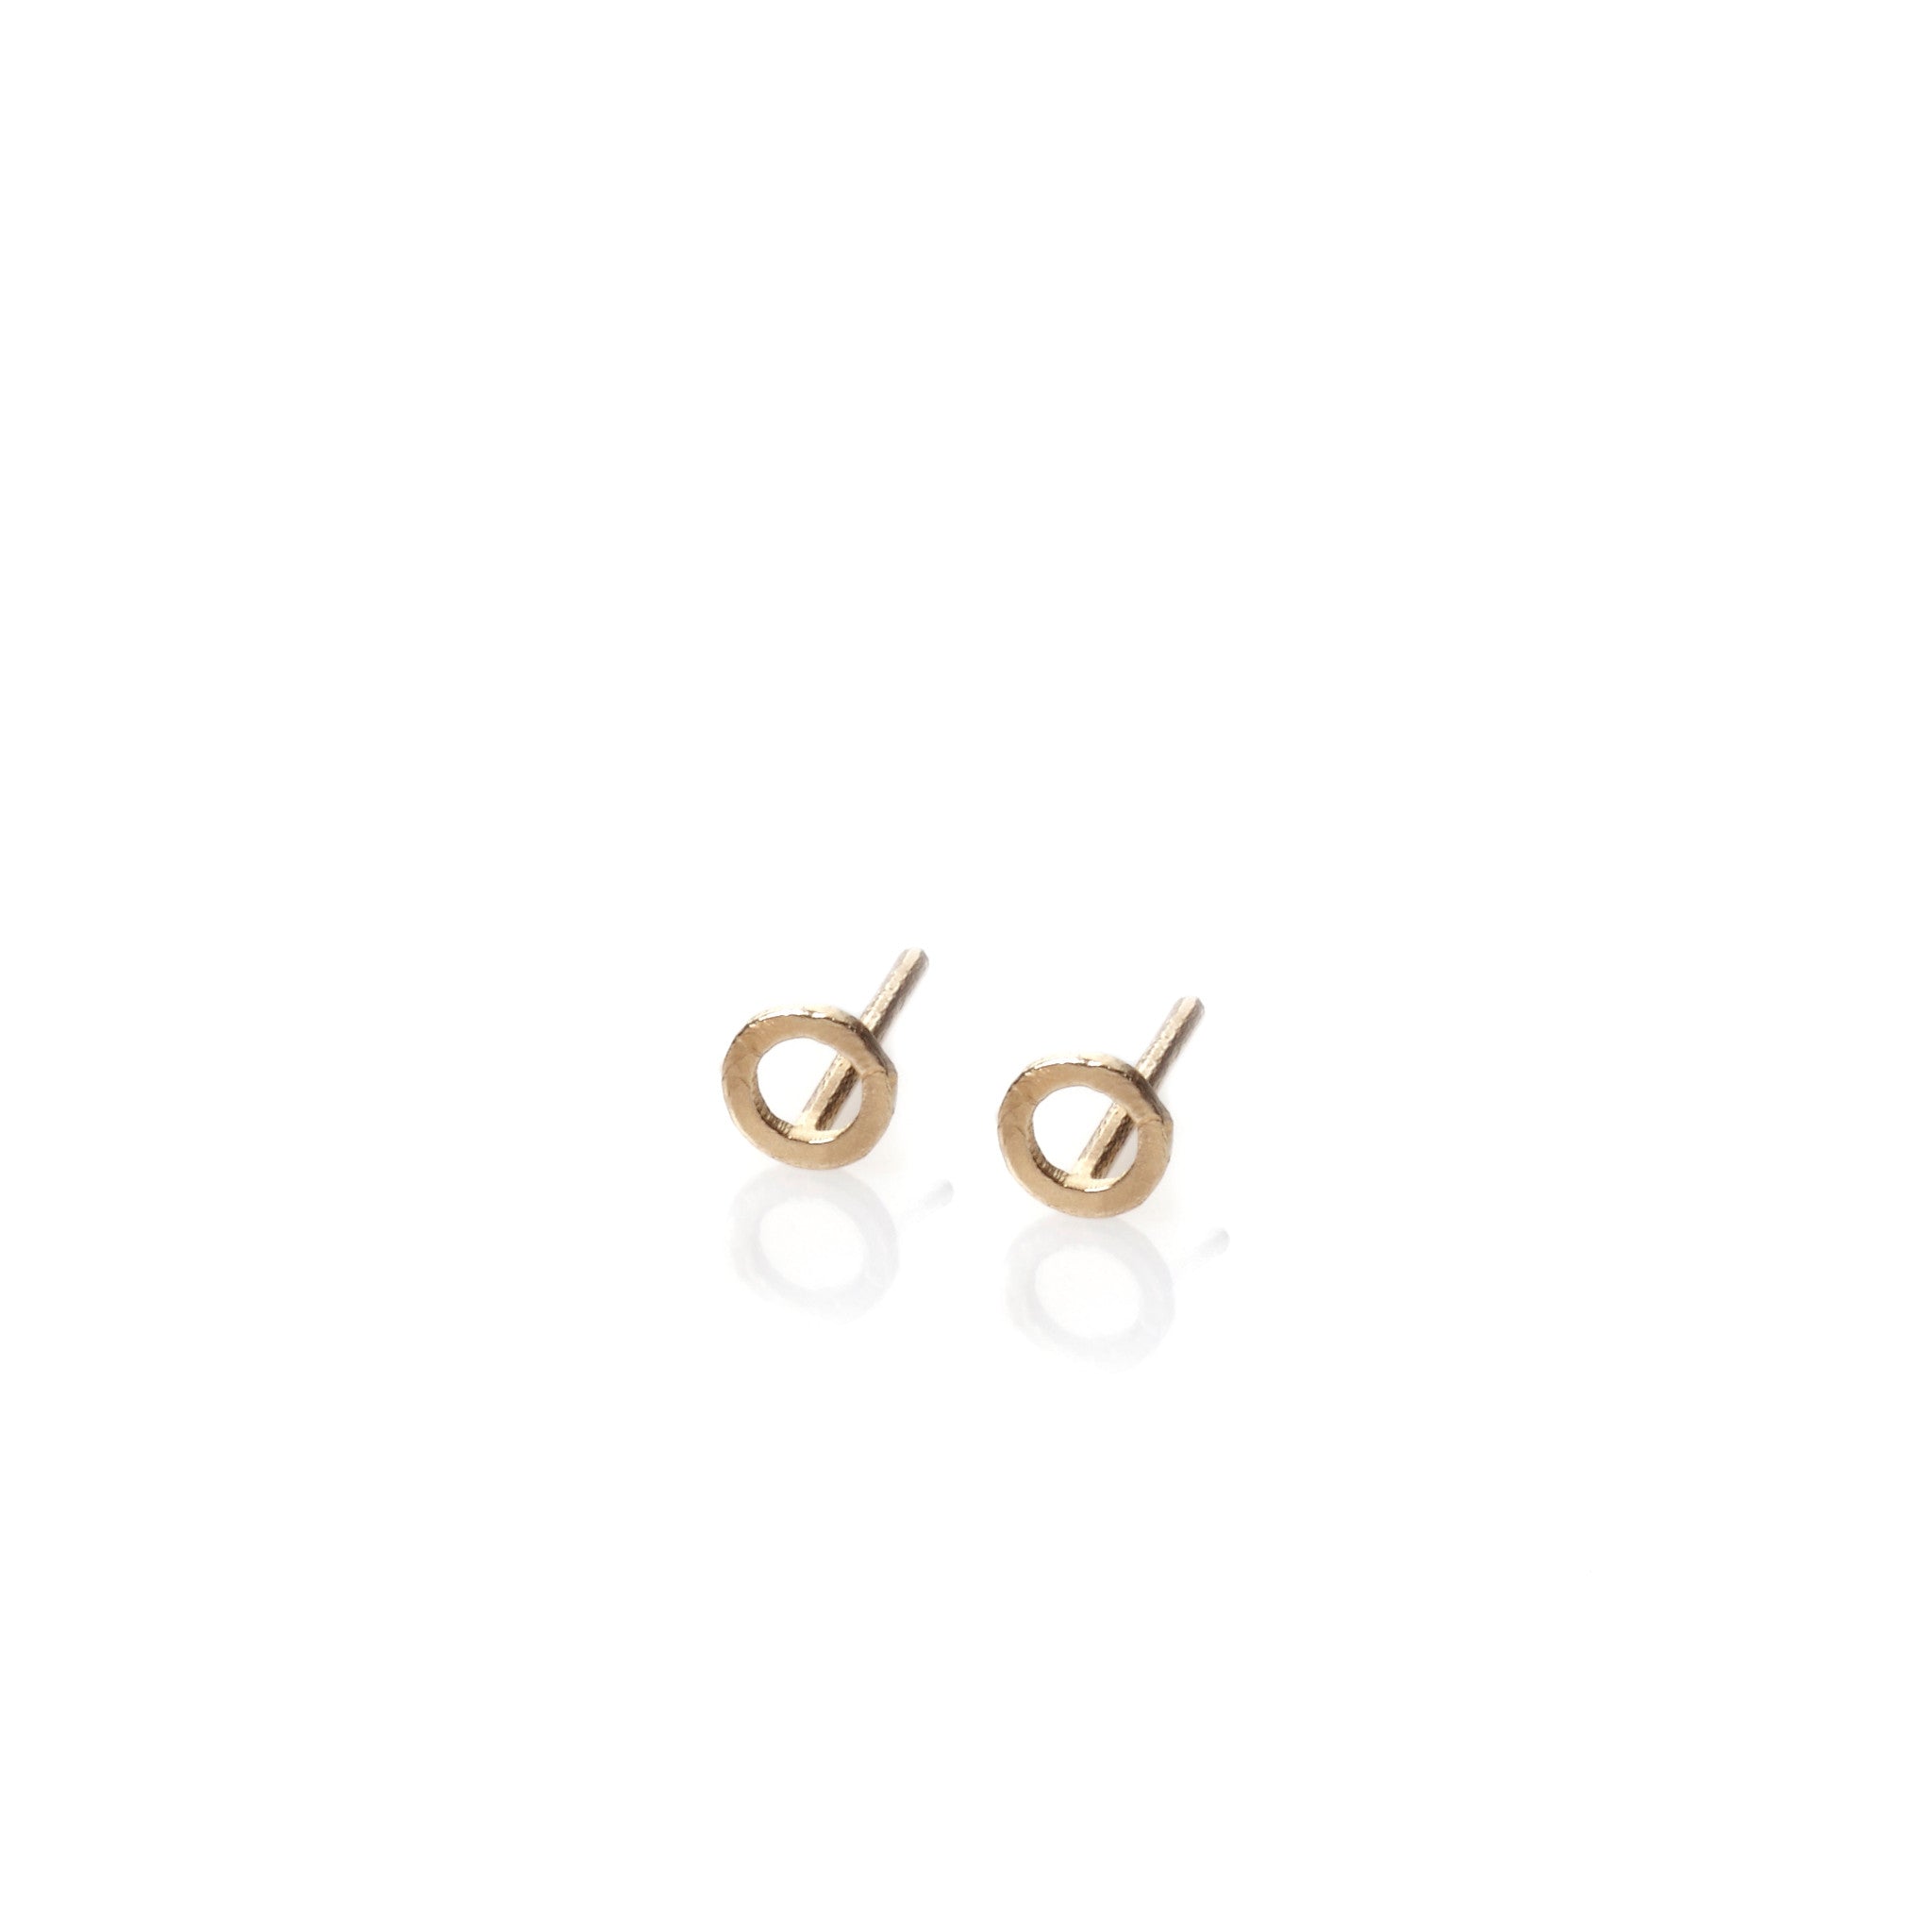 Circle - 14k gold studs earrings